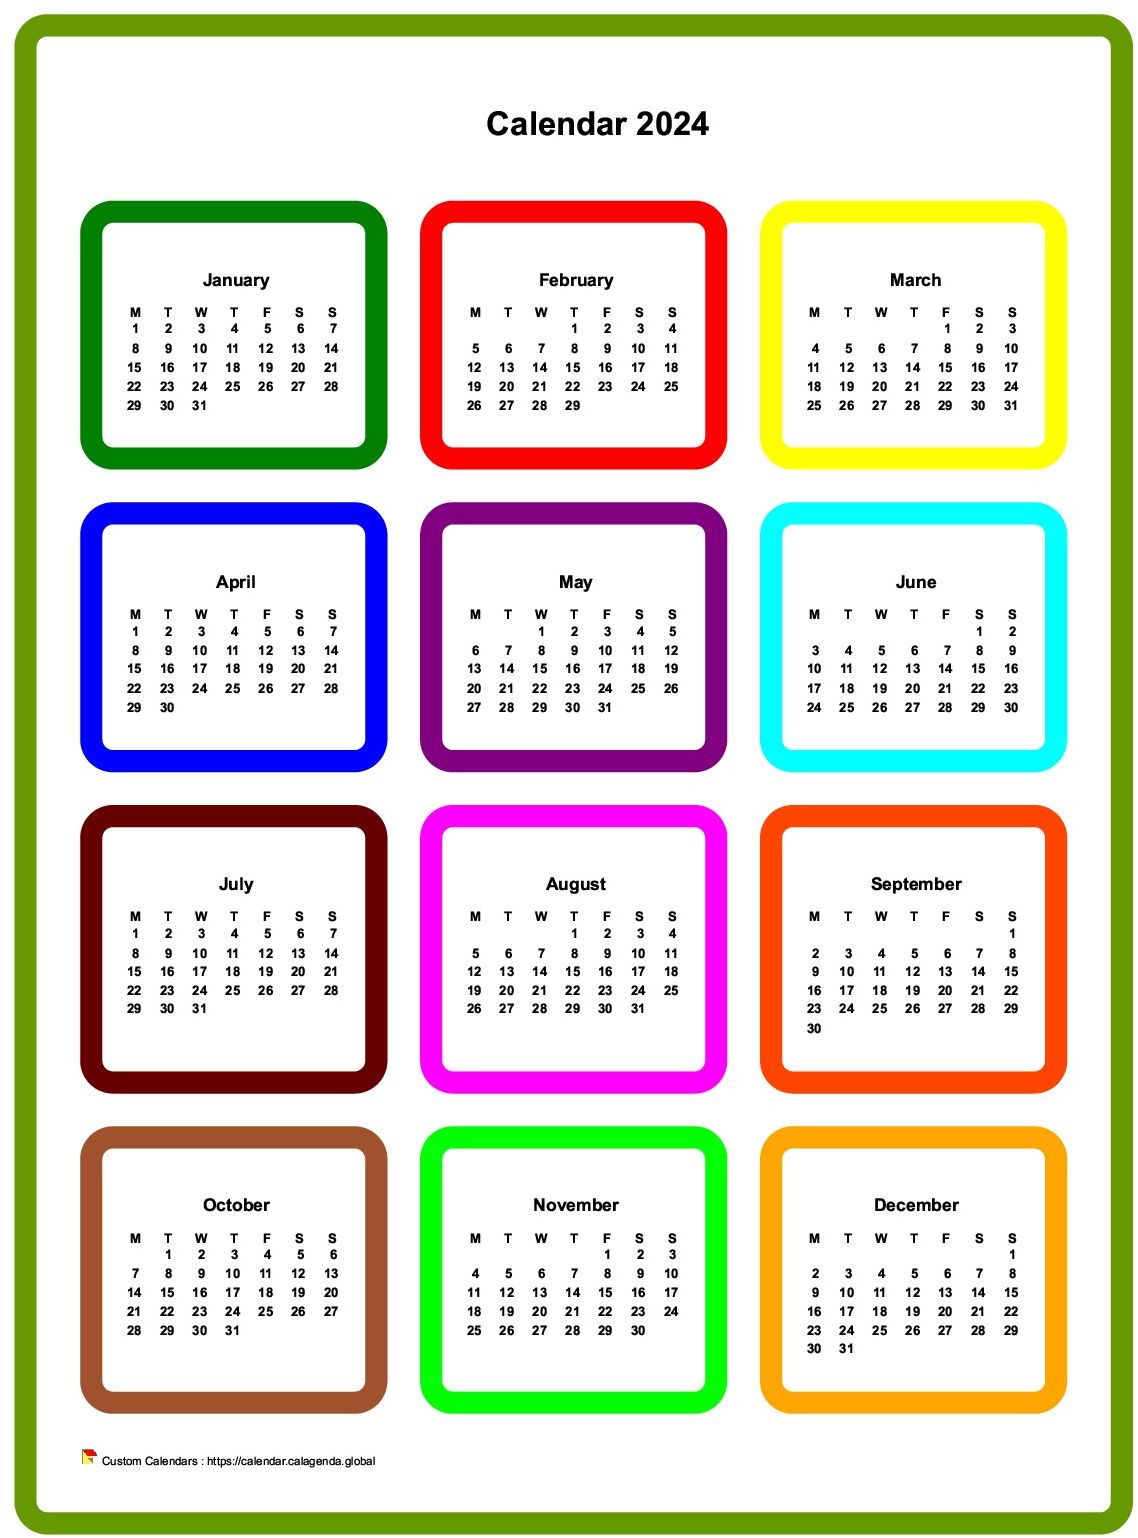 Calendar 2024 annual colored